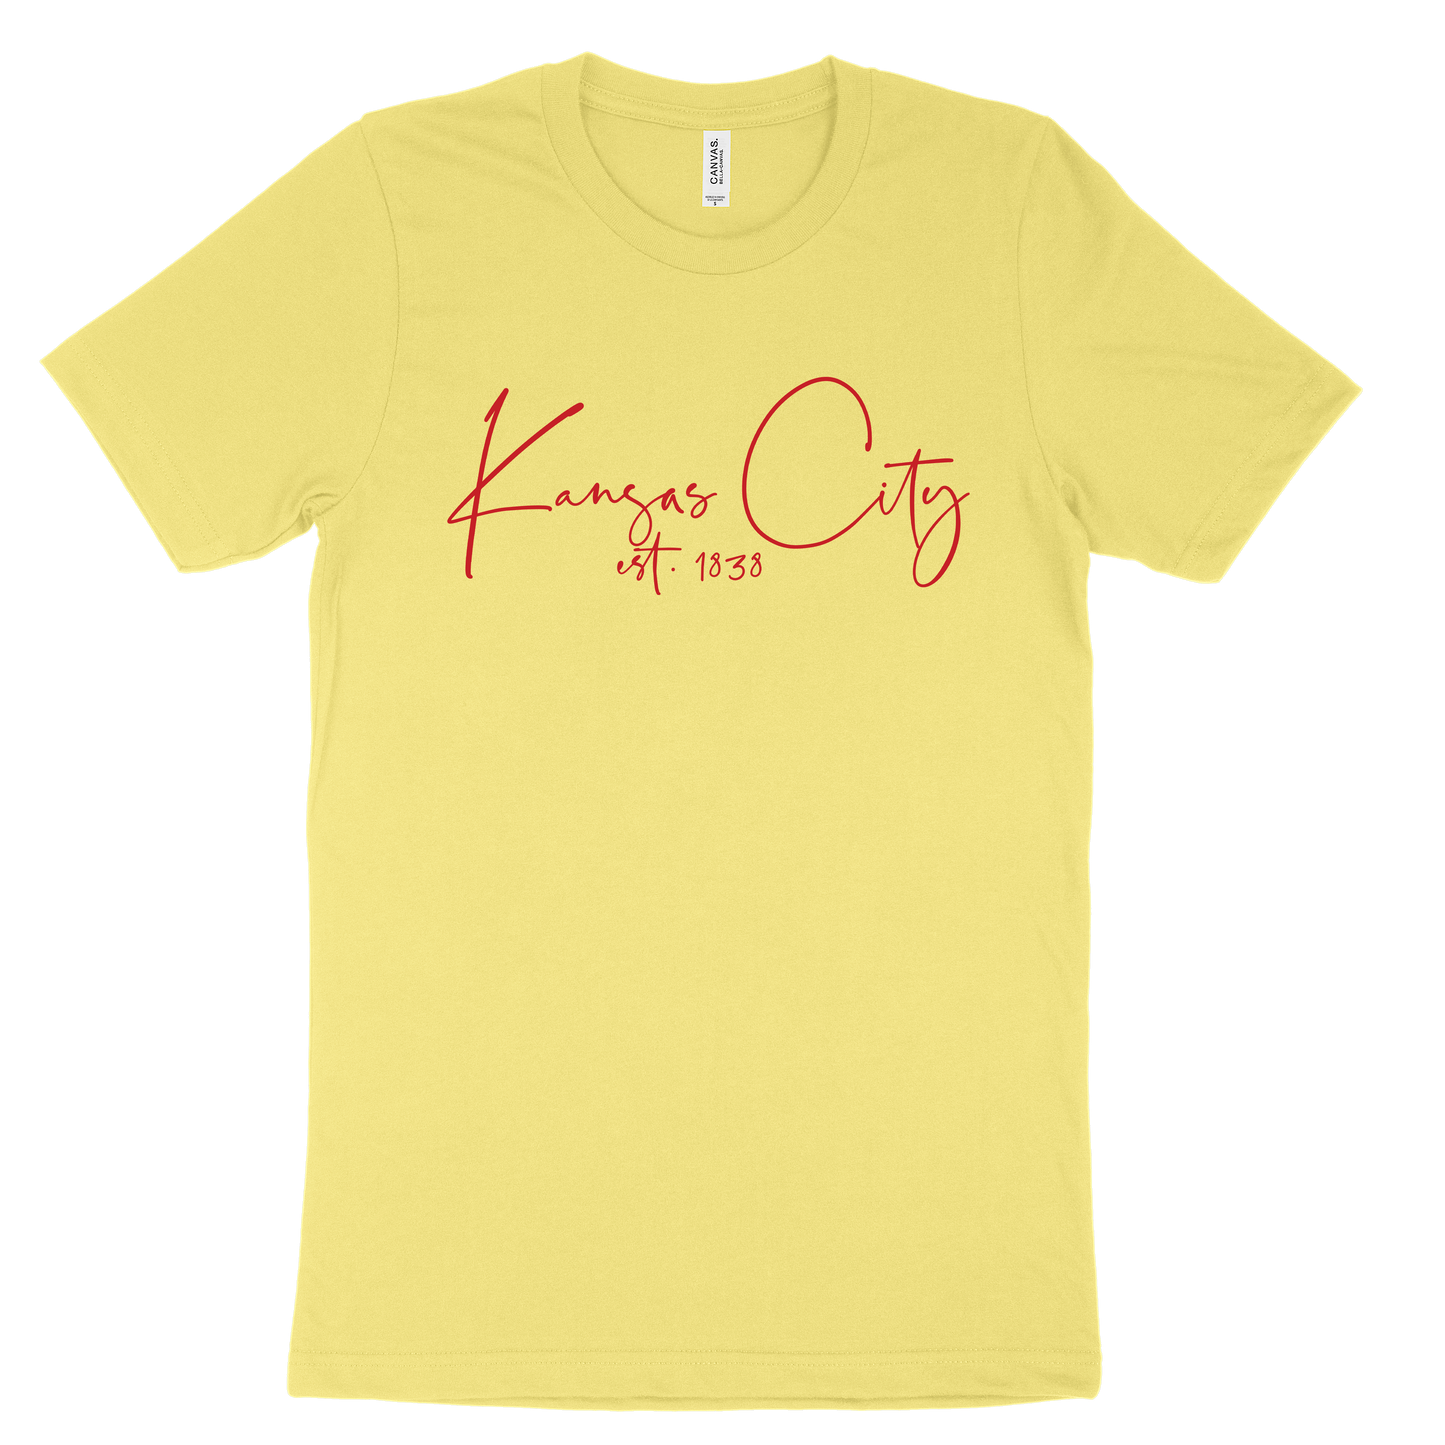 Kansas City EST 1838 Tee - Yellow